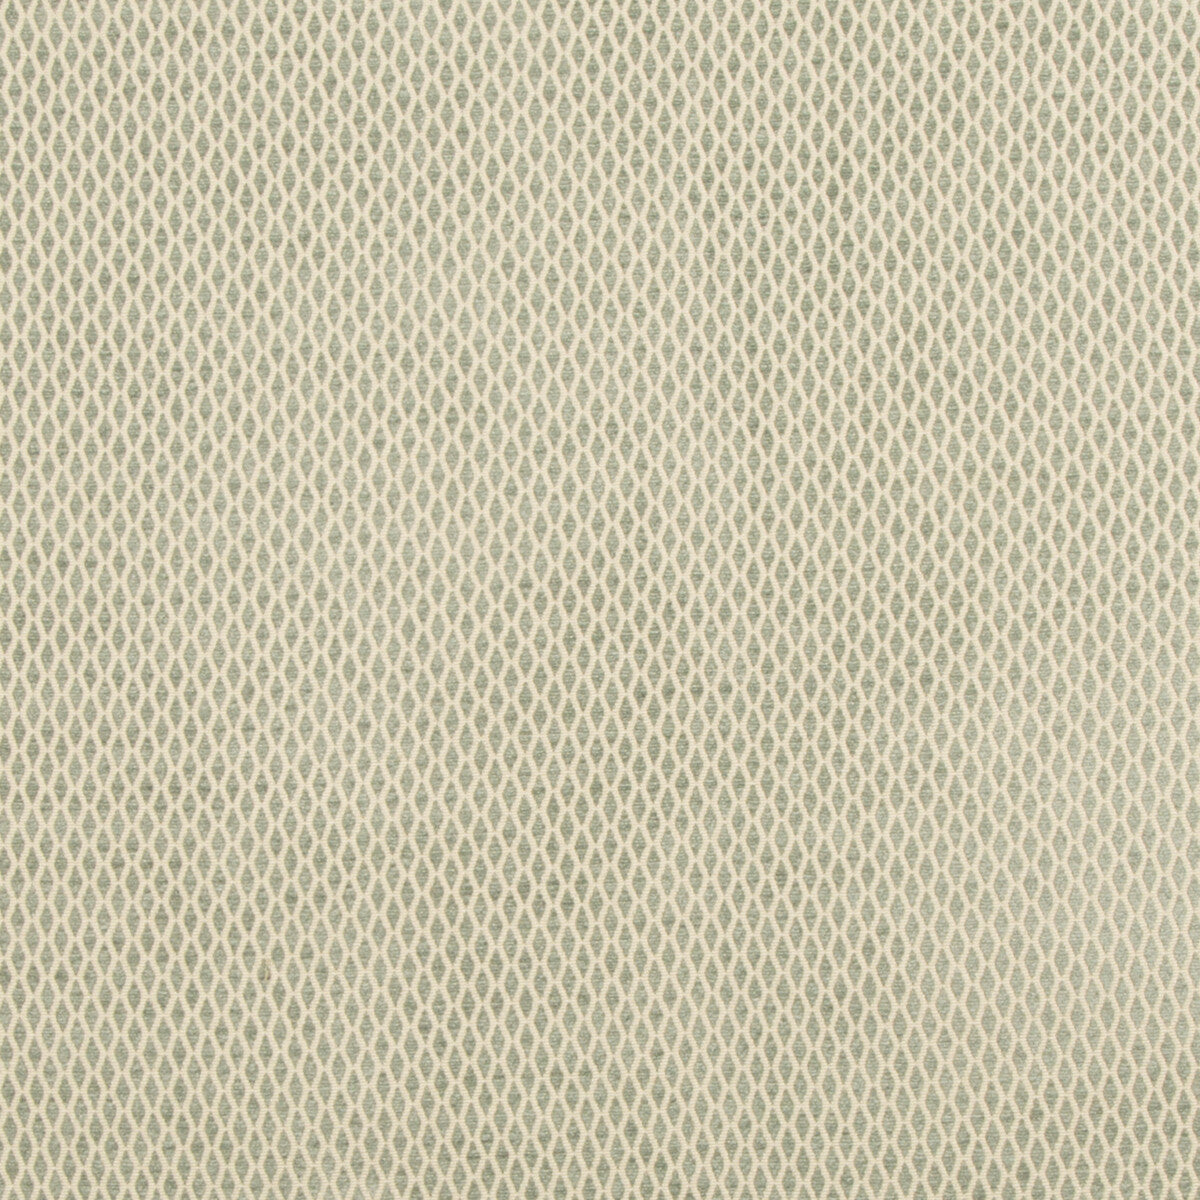 Eddie Chenille fabric in lake color - pattern GWF-2584.153.0 - by Lee Jofa Modern